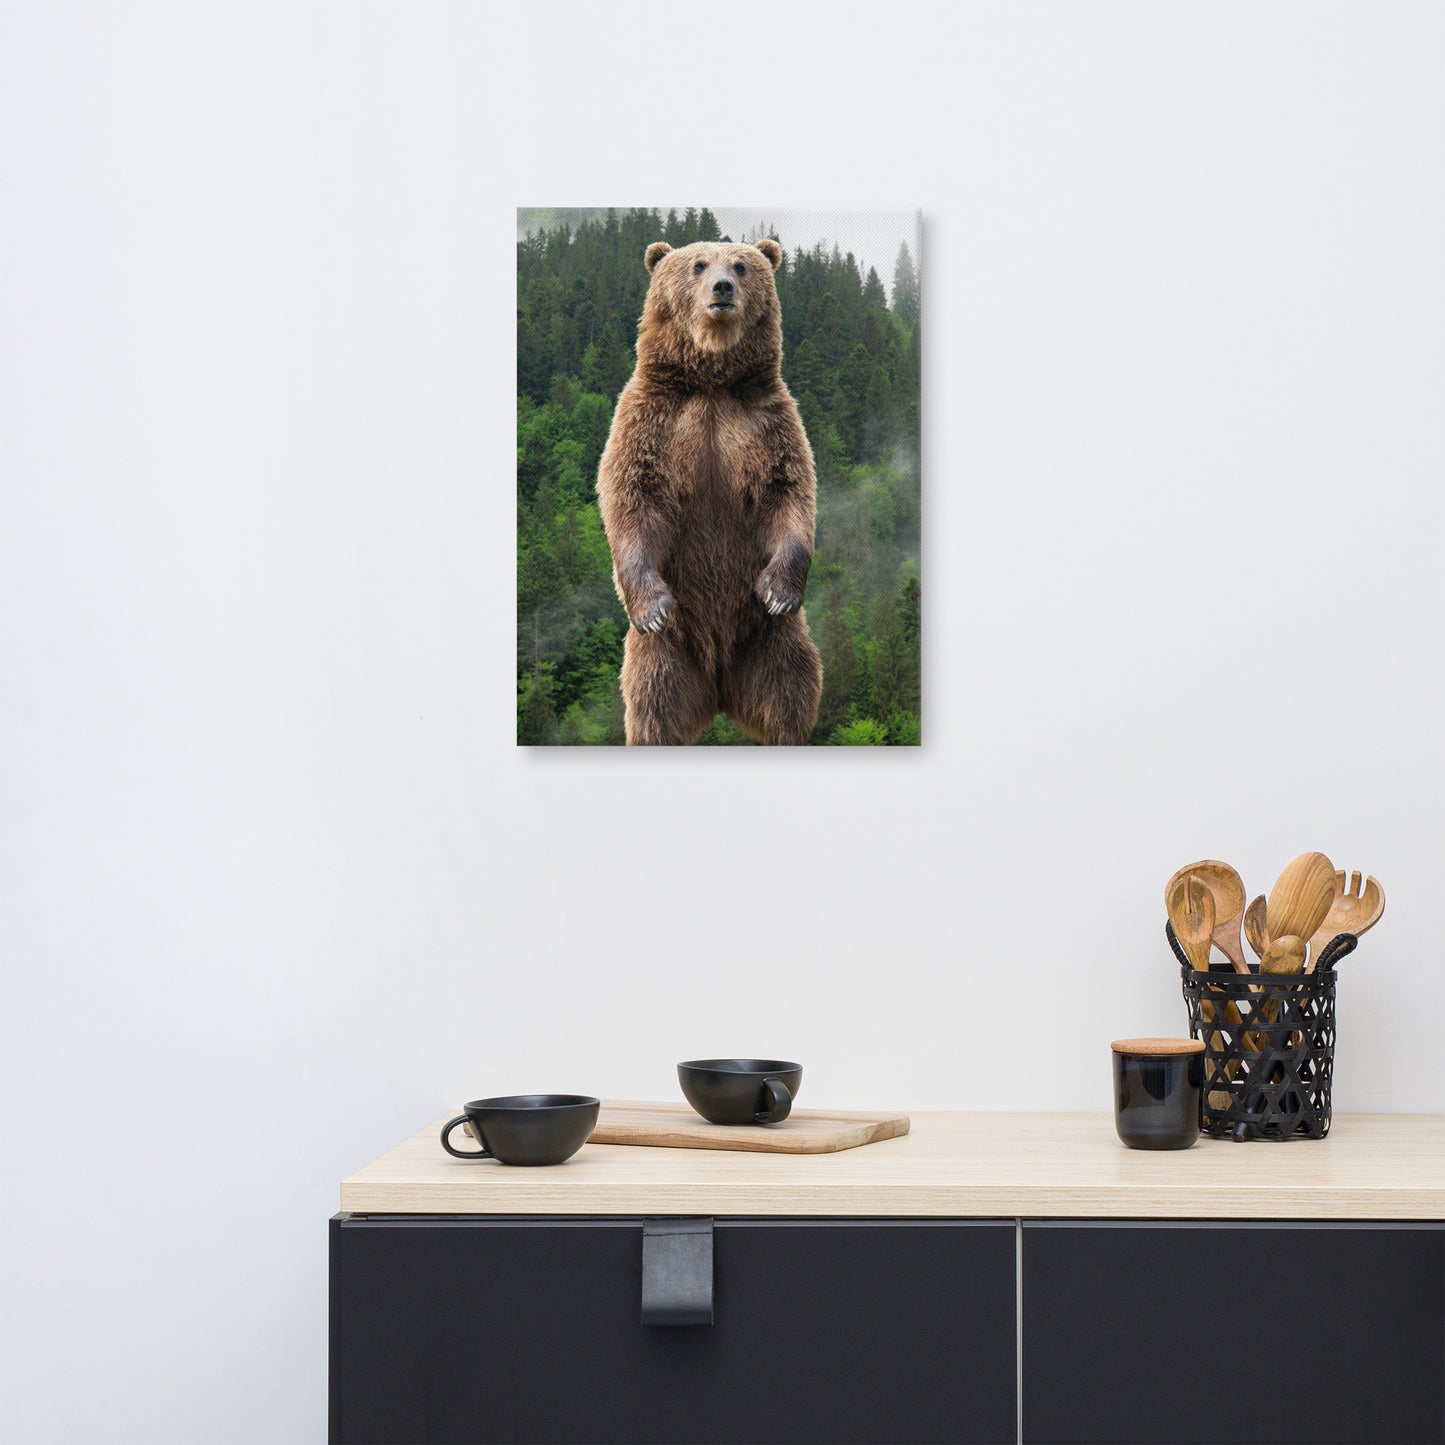 Big Standing Brown Bear On Mountain Top Animal Wildlife Photograph Canvas Wall Art Prints